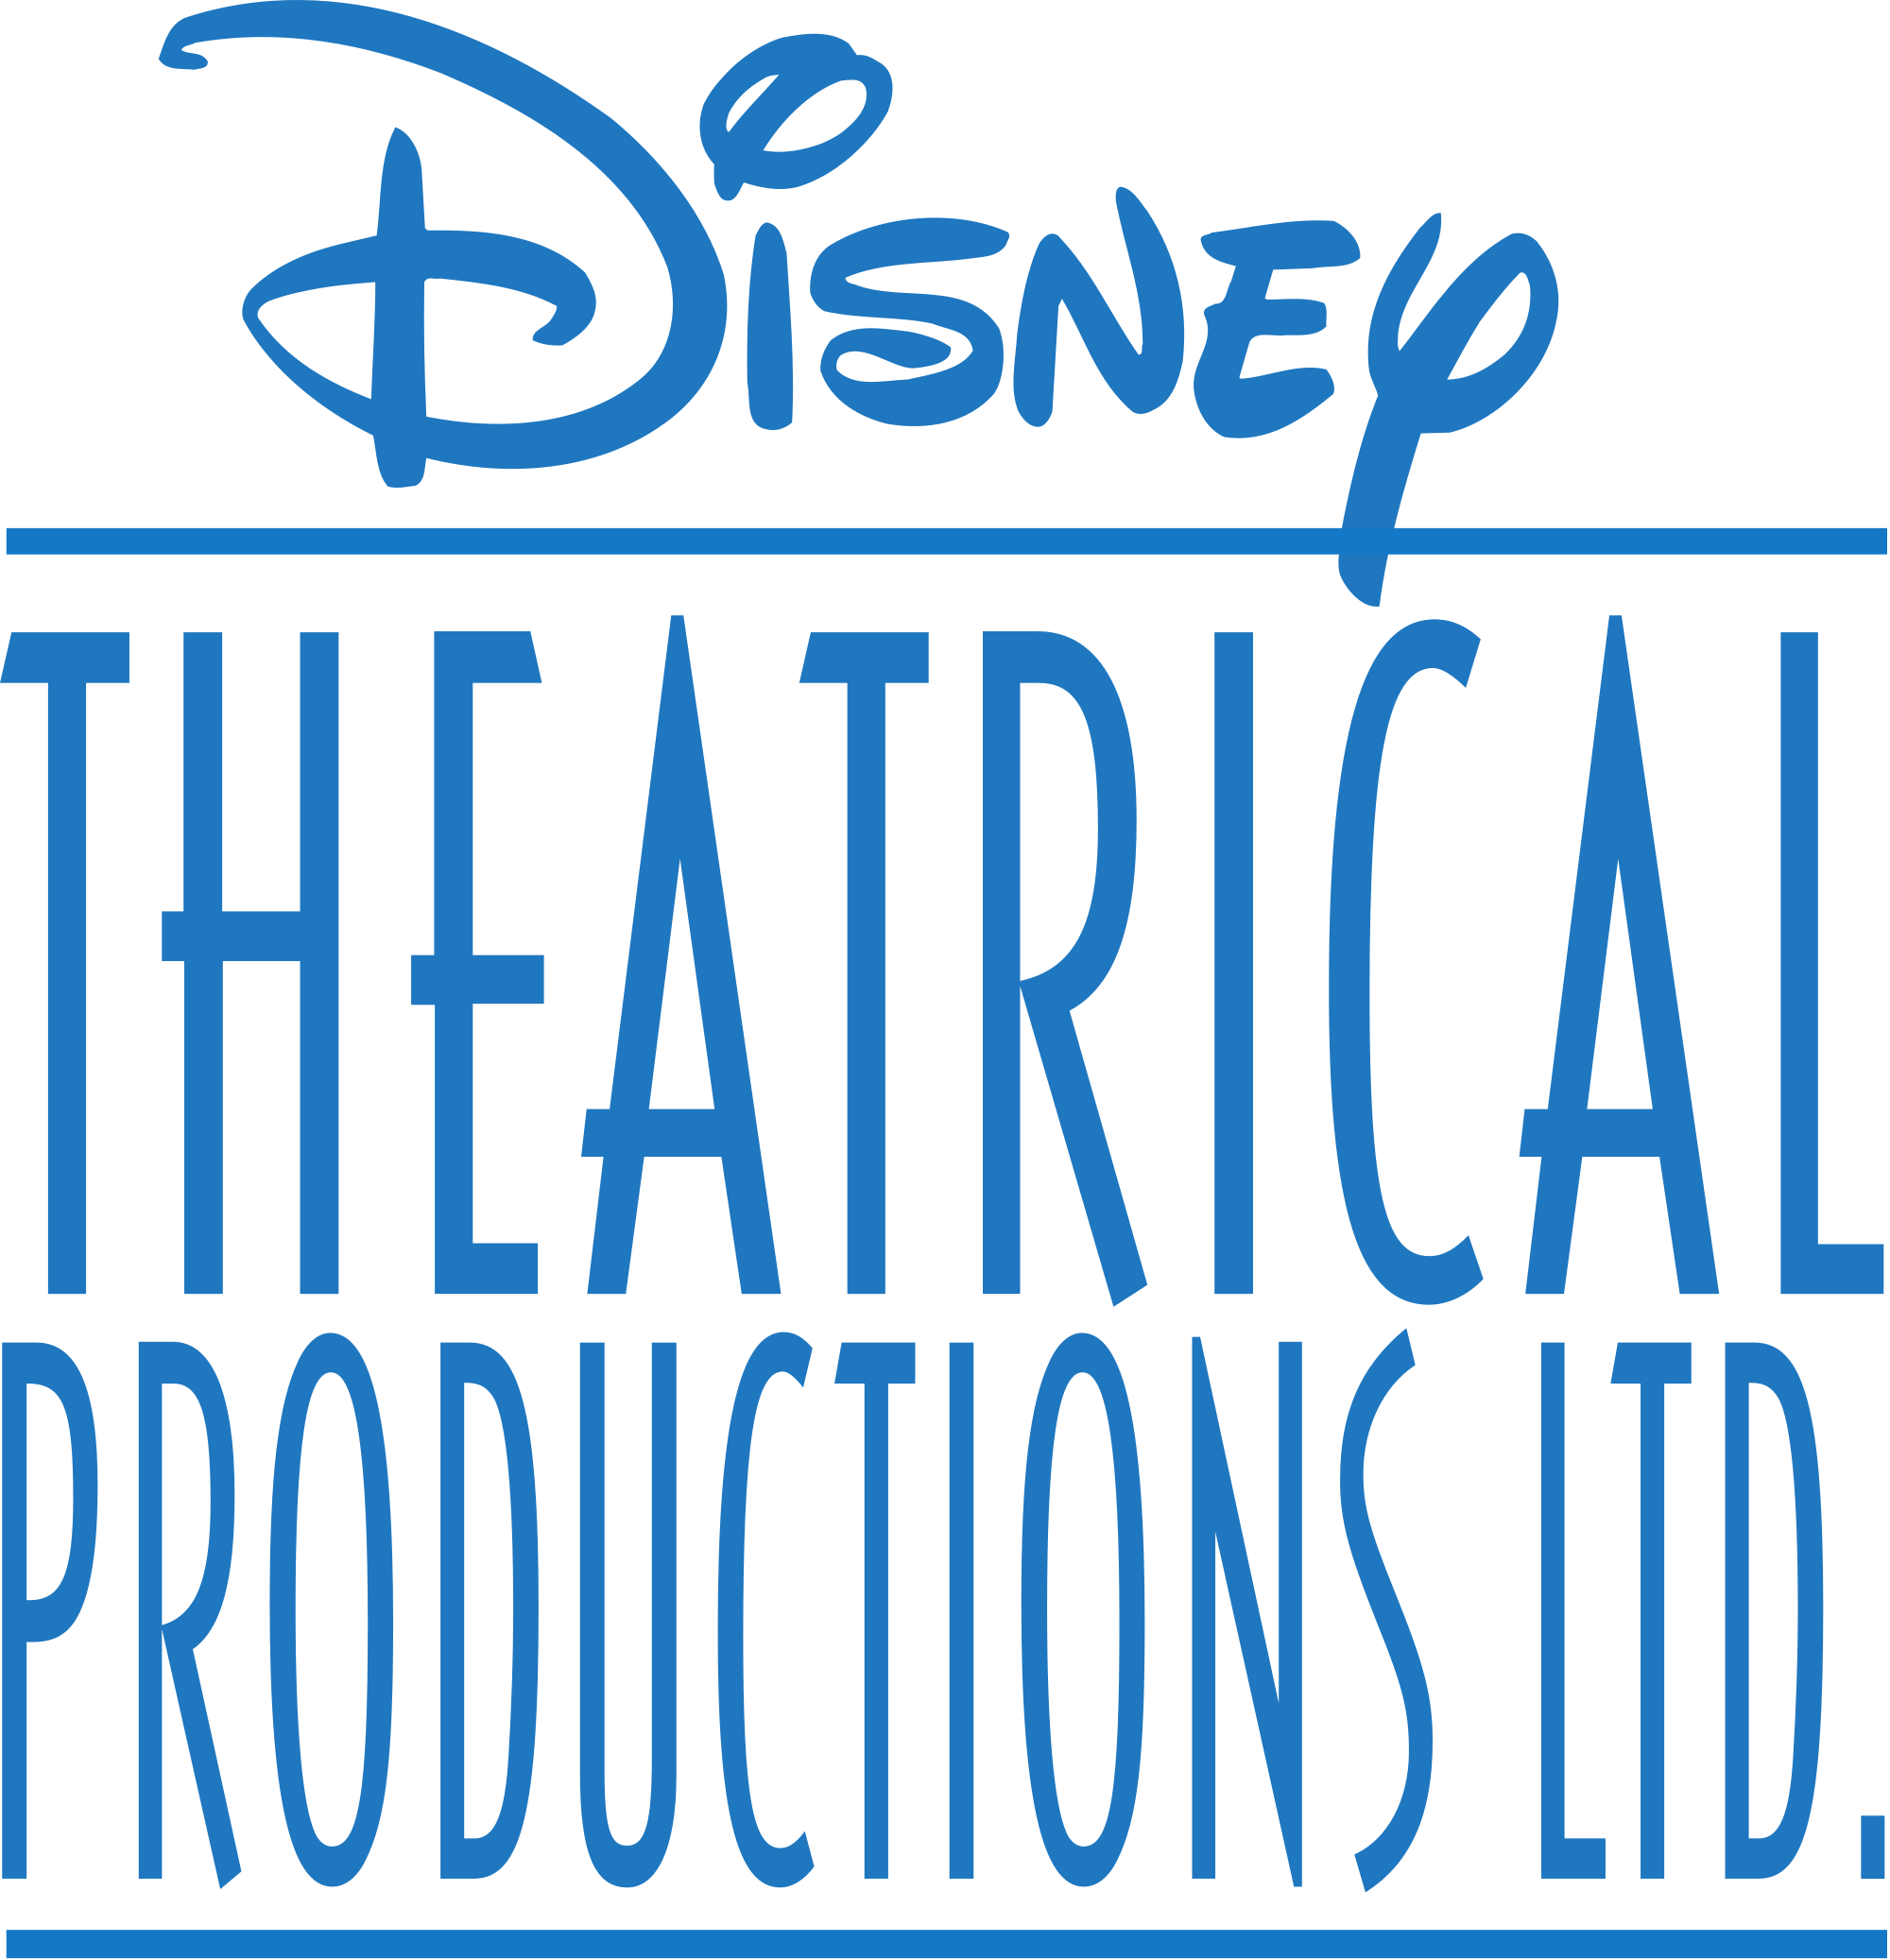 Disney Theatrical Productions, Ltd.